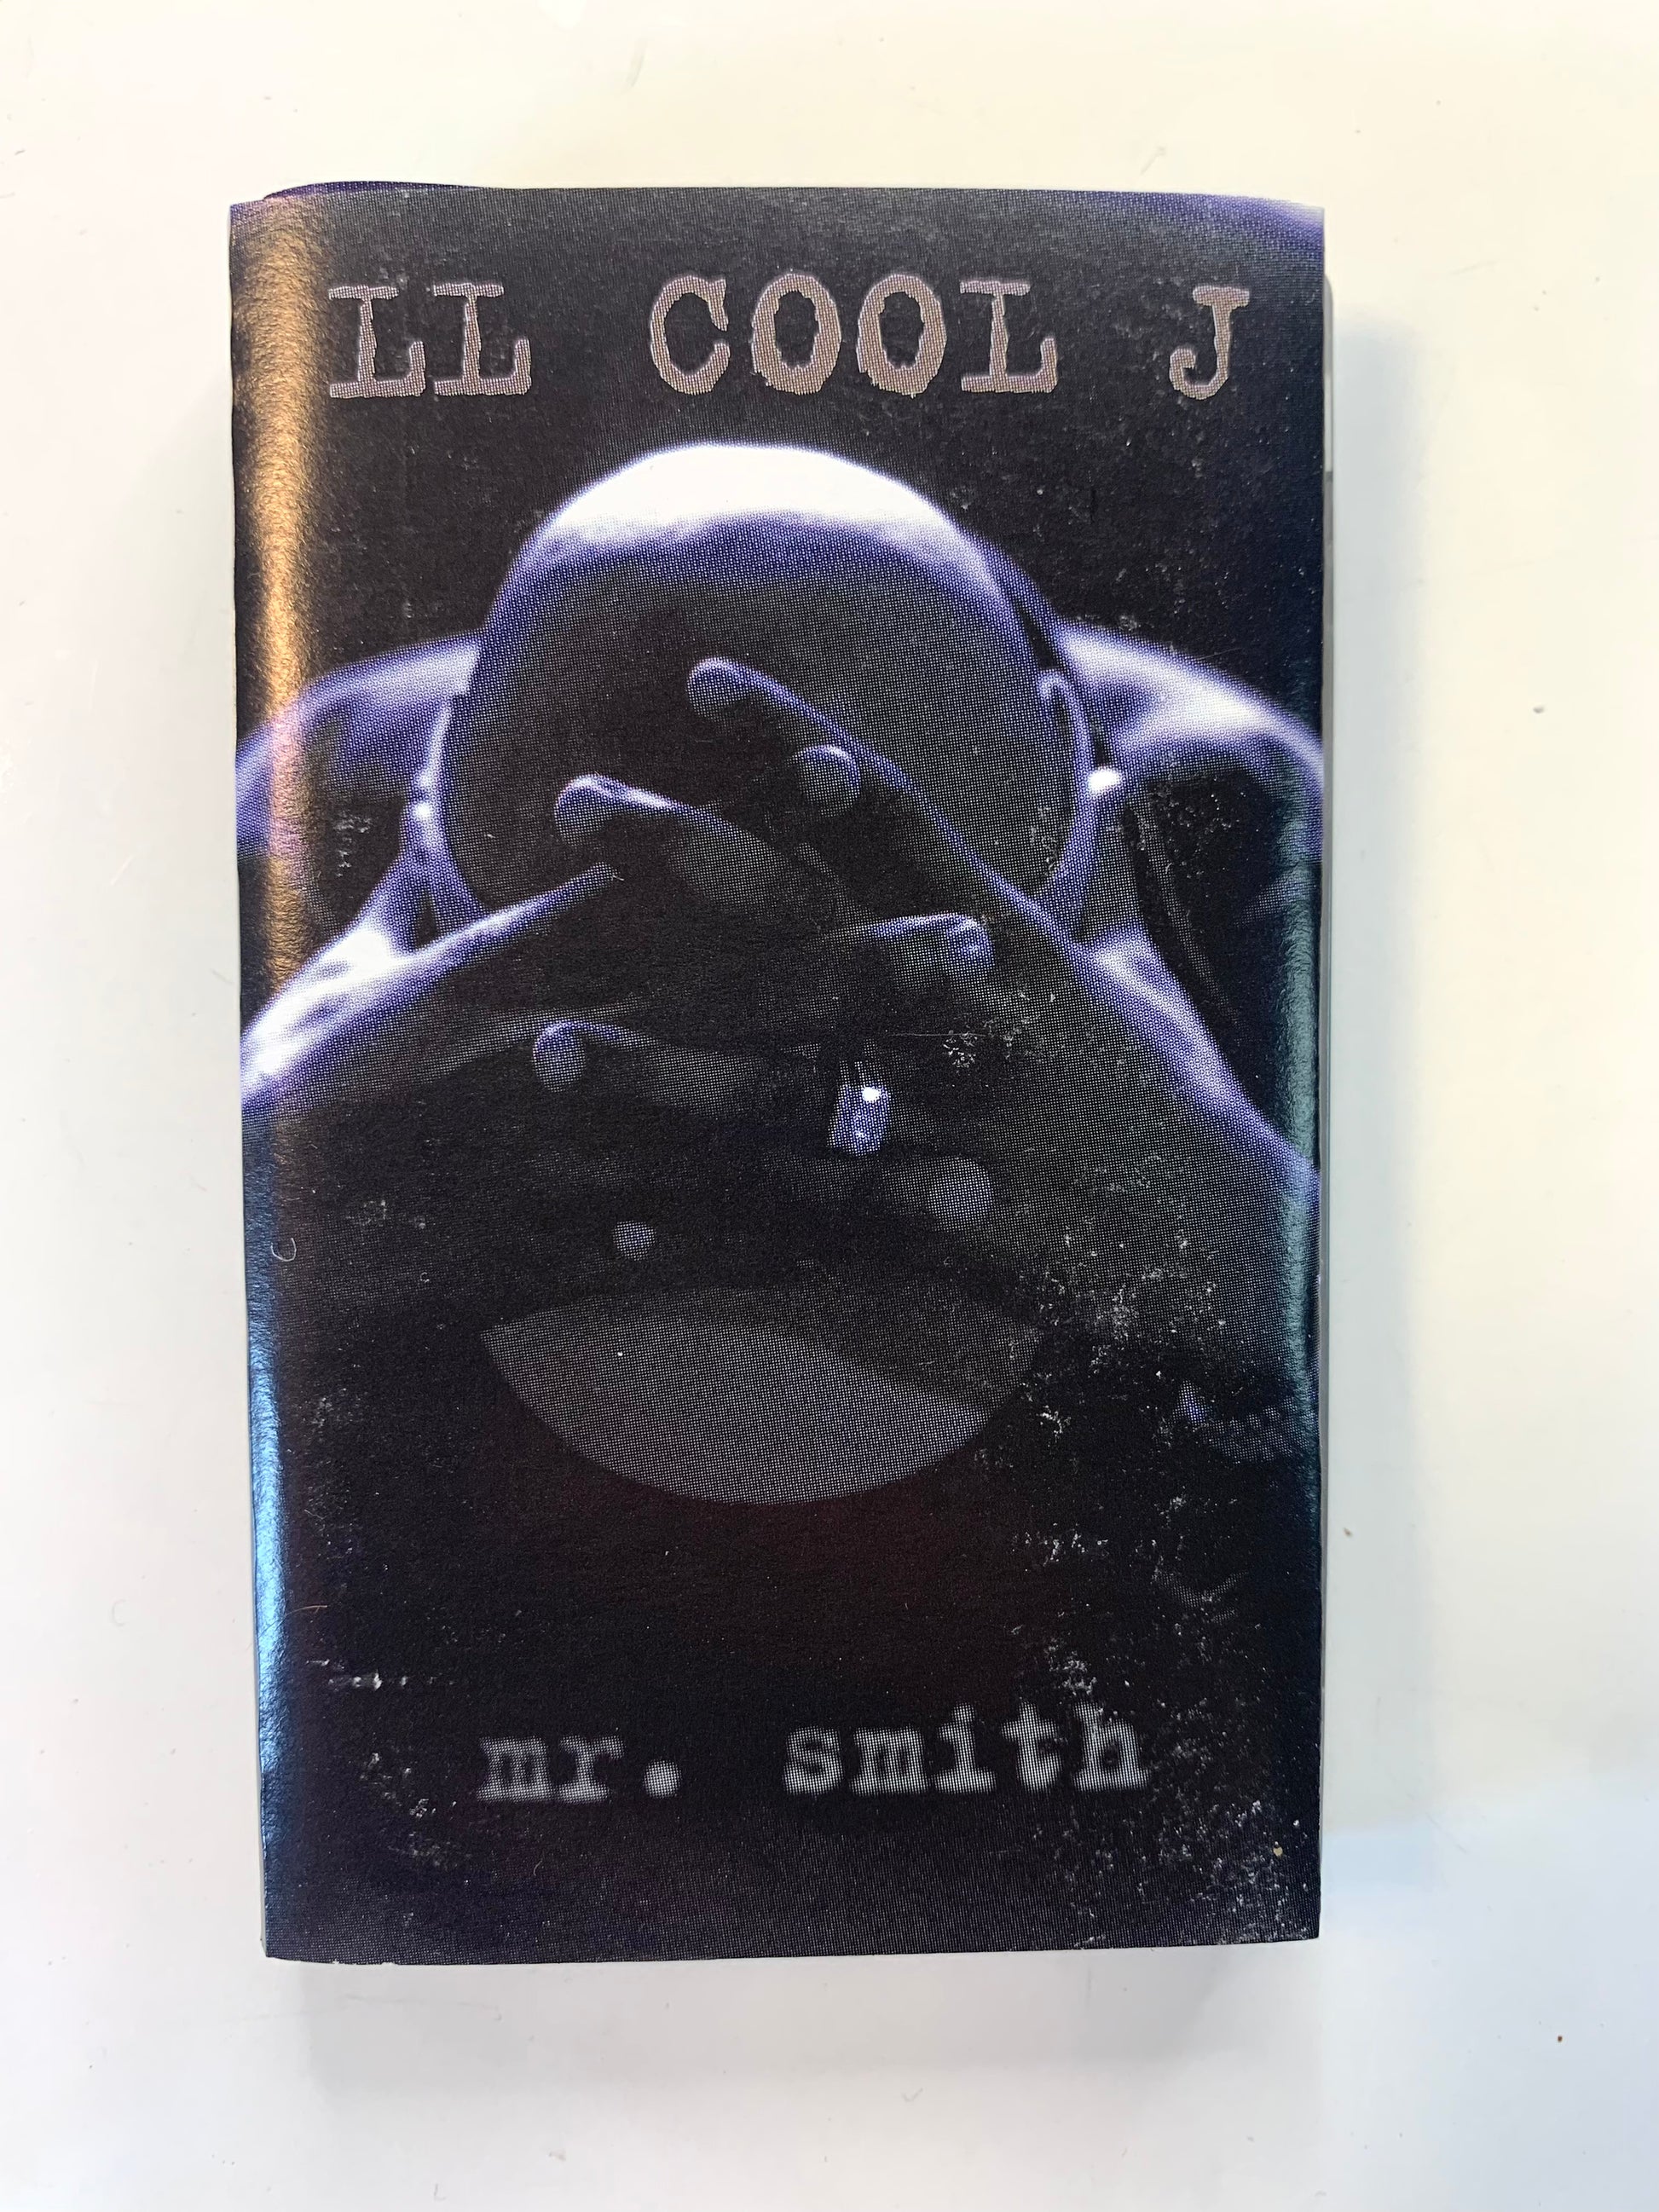 LL Cool J, Mr. Smith